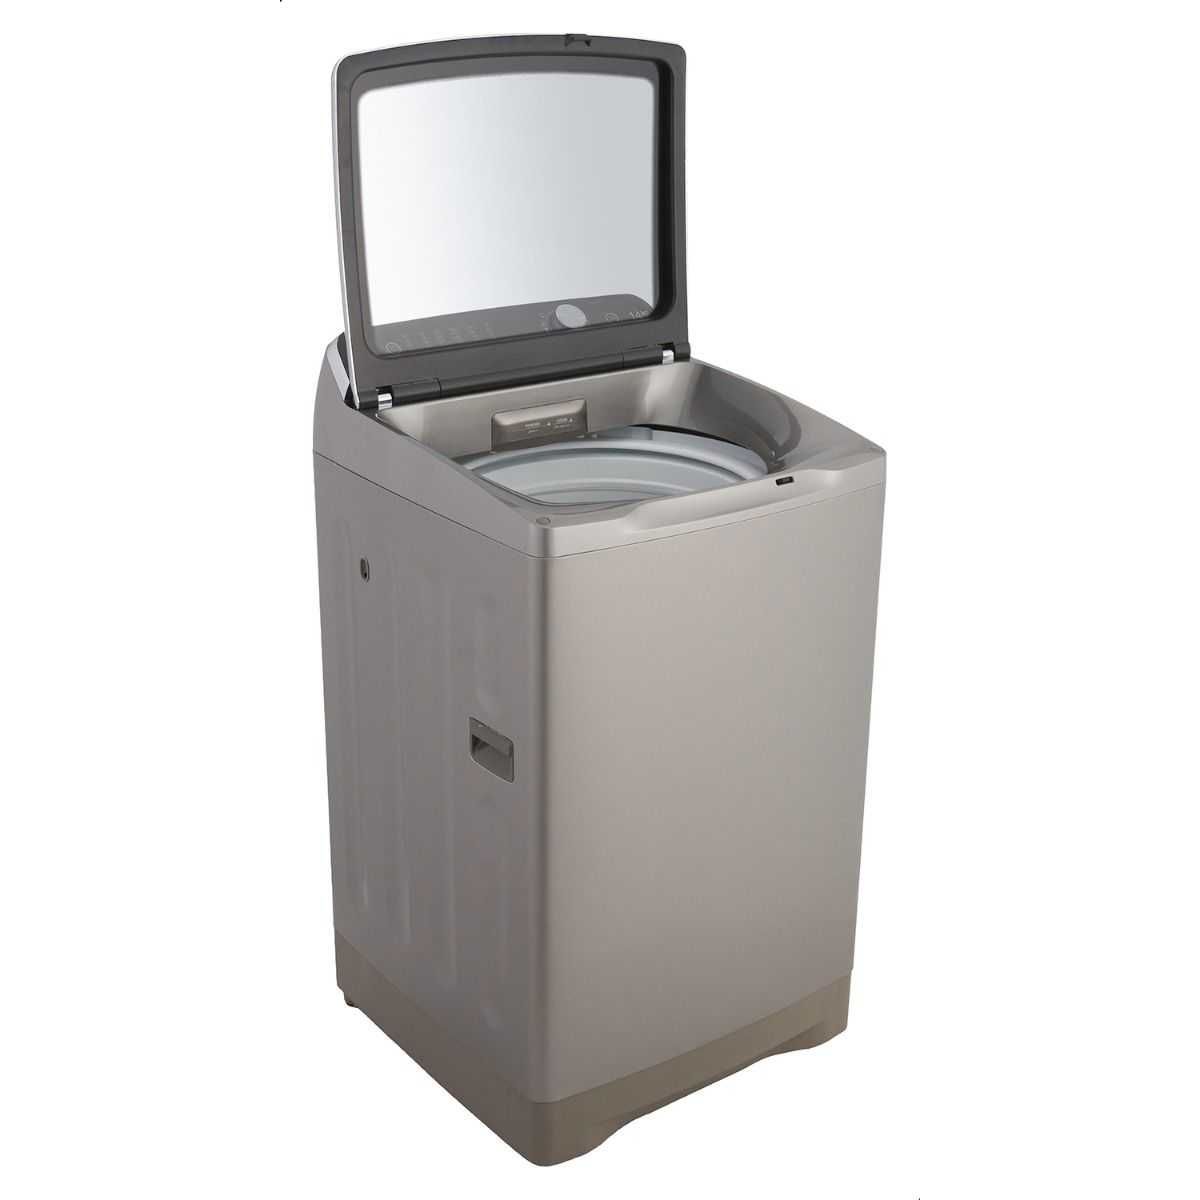 Haier Top Load Automatic Washing Machine, 14 kg, Silver - HWM140-1678S